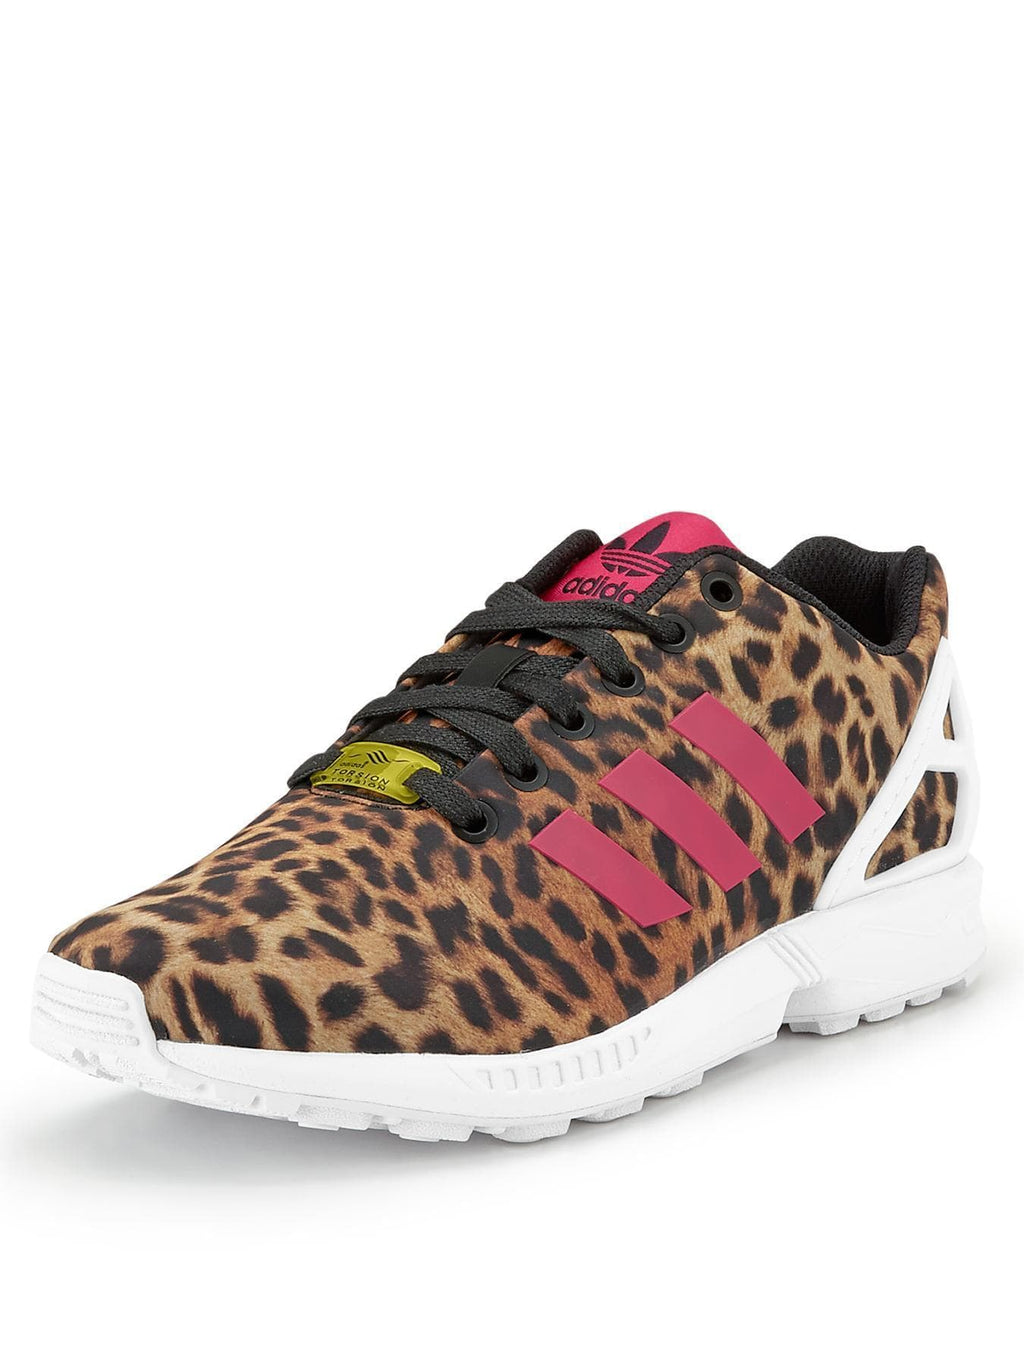 adidas Originals Womens ZX Flux 'Leopard' - Kick Game